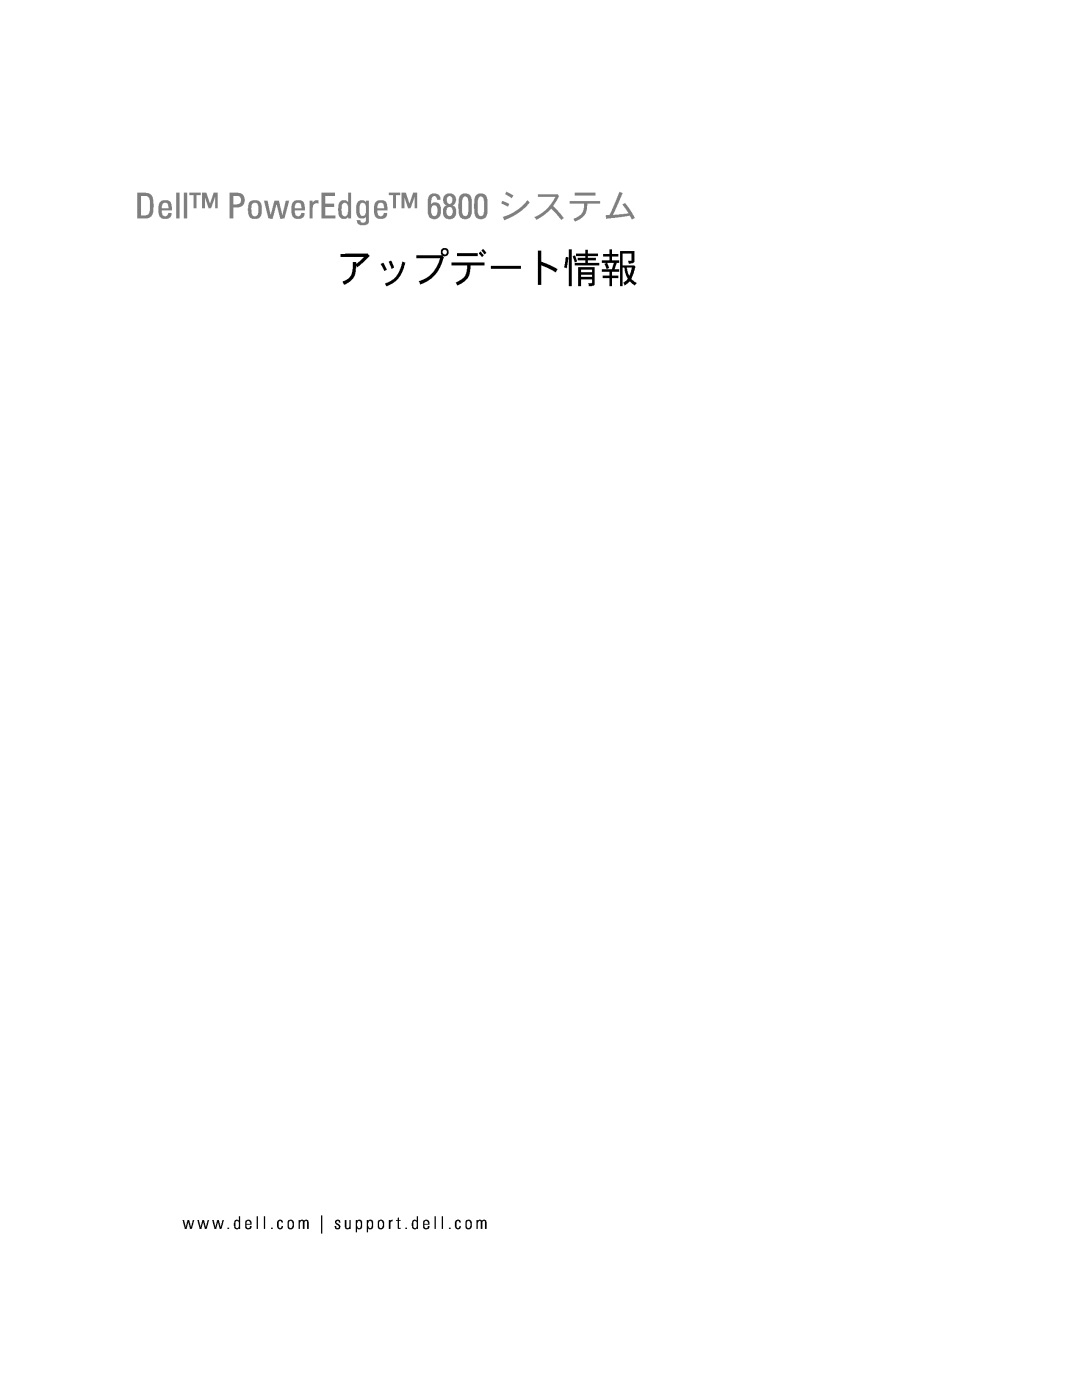 Dell manual Dell PowerEdge 6800 システム, アップデート情報 